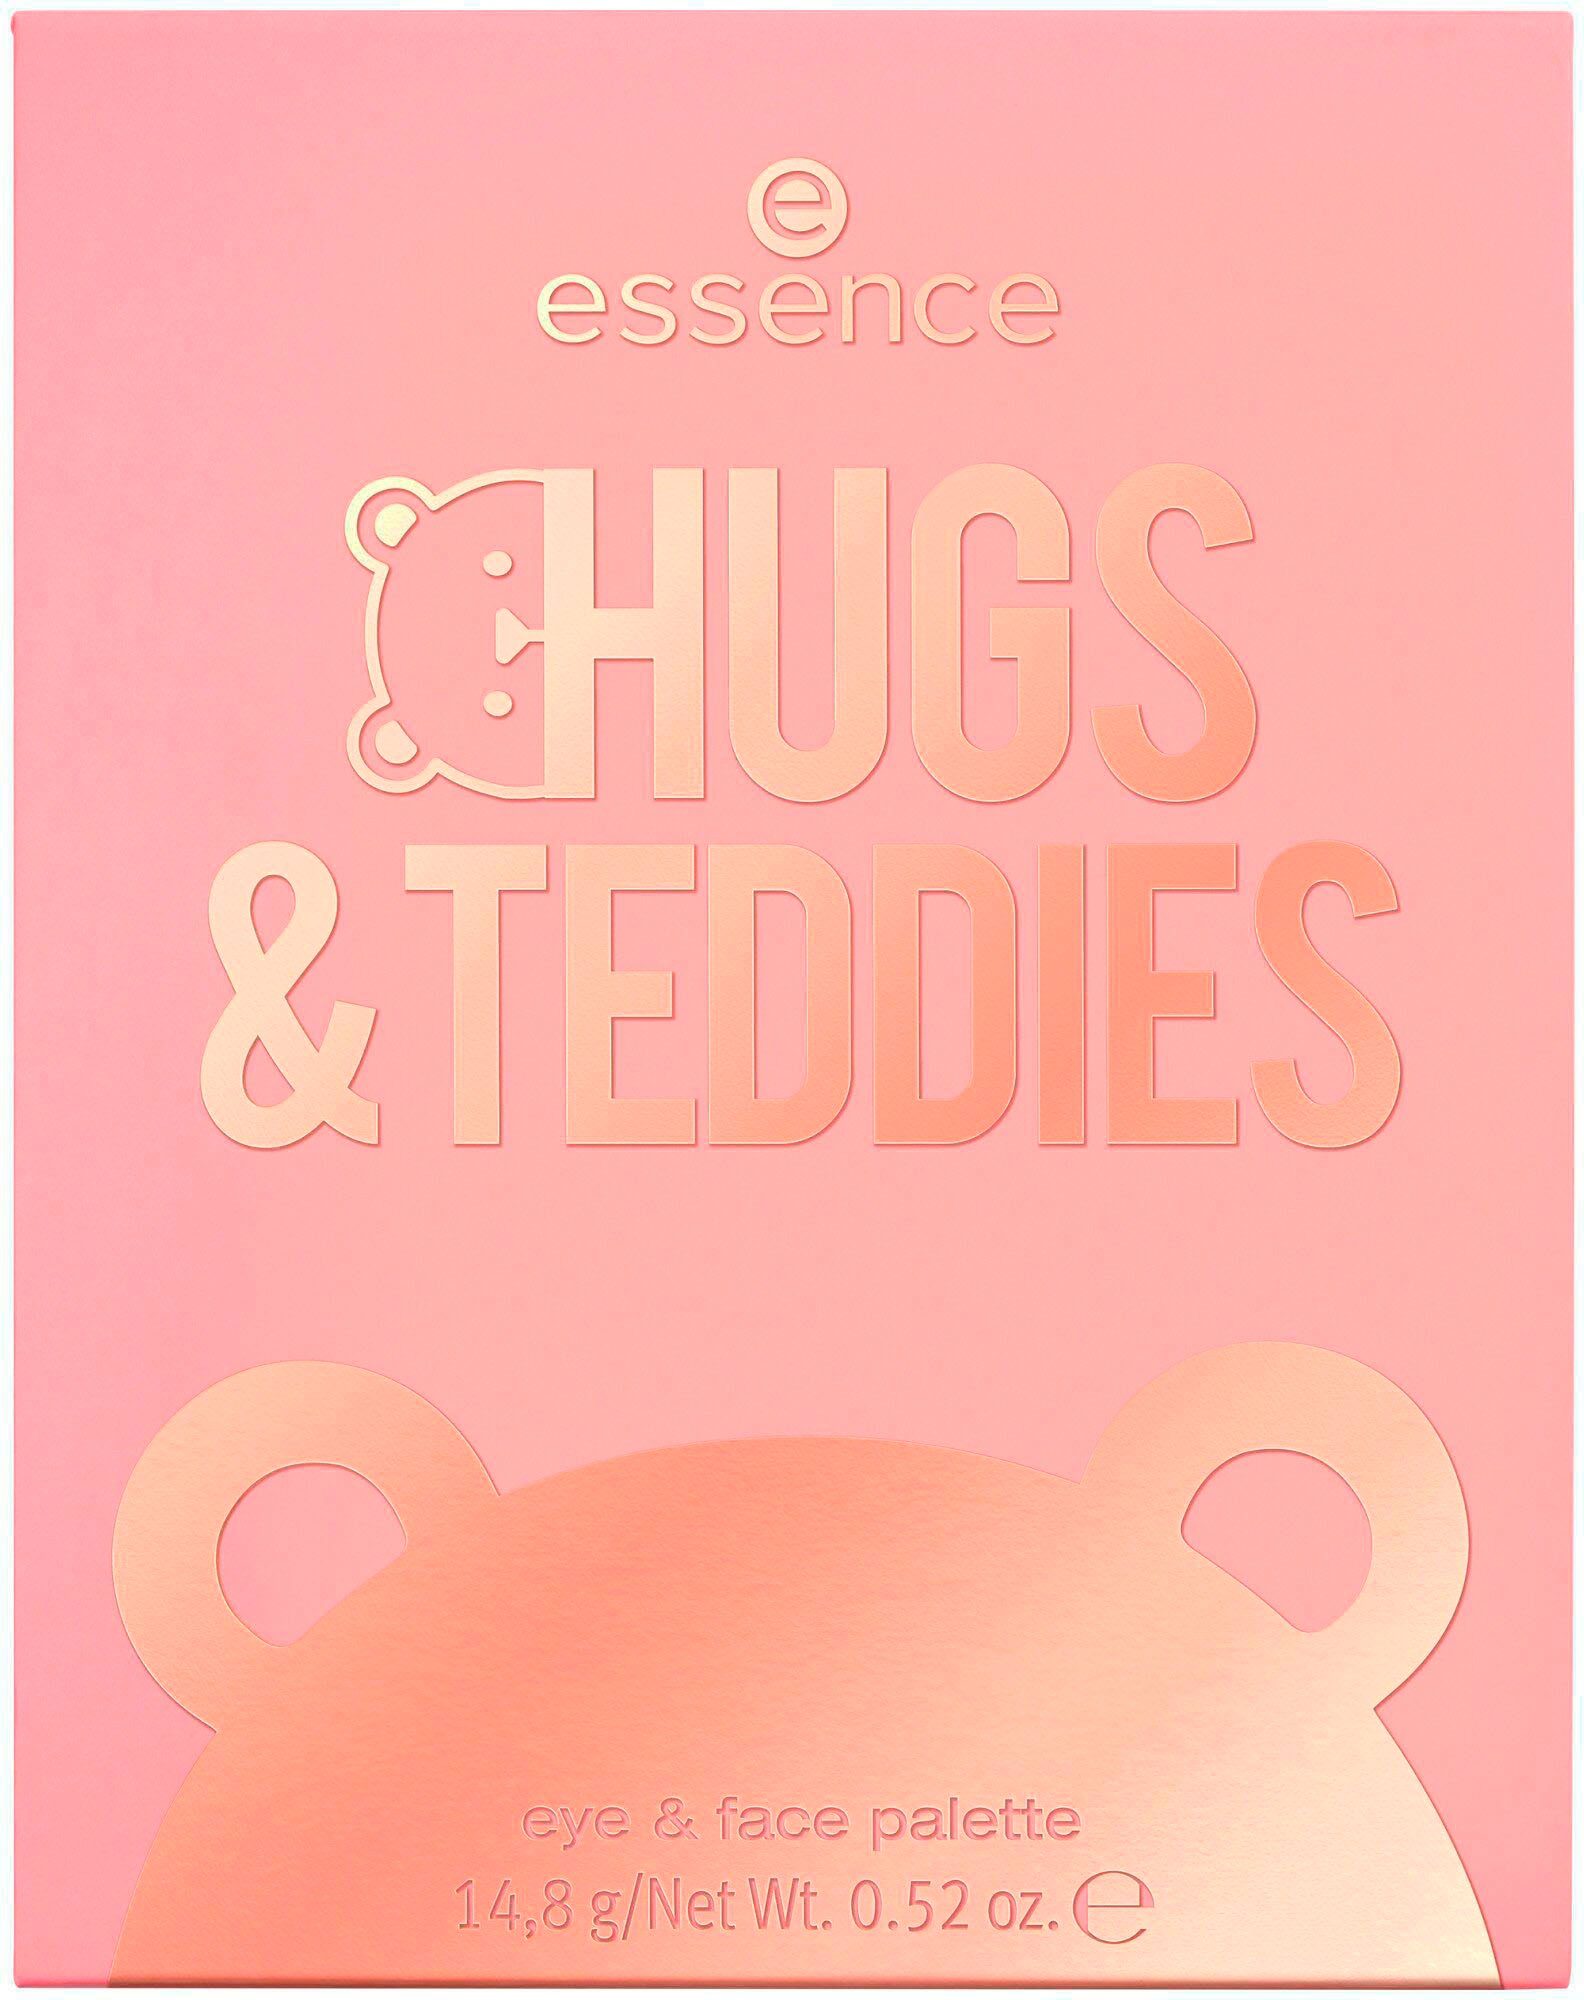 Rouge-Palette HUGS&TEDDIES Essence face palette eye &